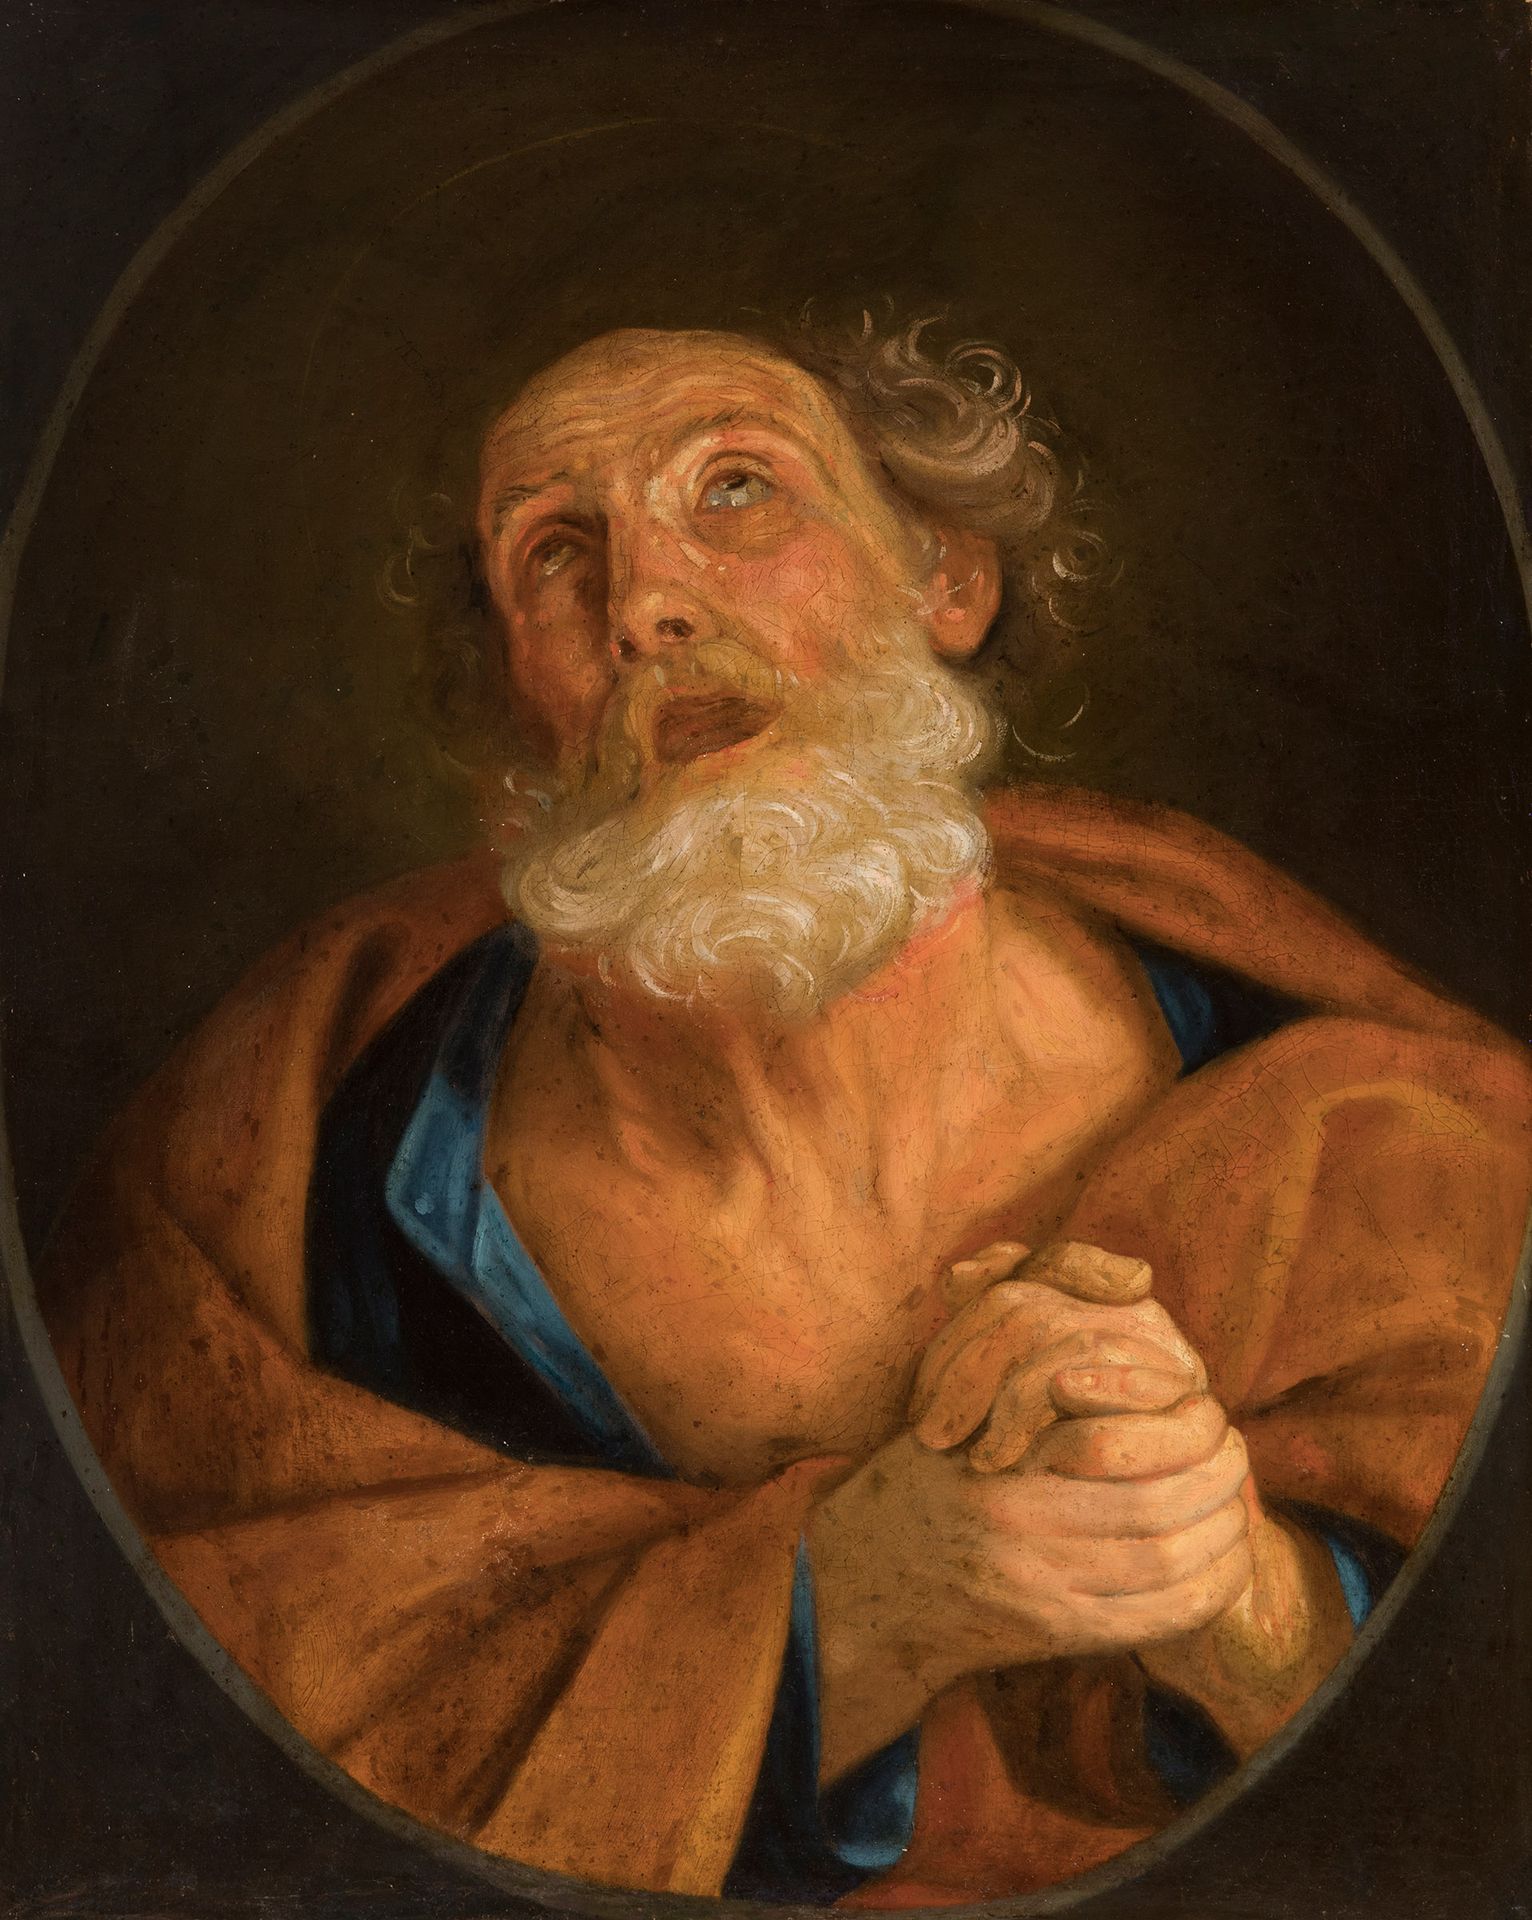 Null 意大利学校；17世纪。
"圣彼得的眼泪"。
布面油画。
它在画面上呈现出修复和重绘的效果。
尺寸。74 x 59厘米。
这幅作品的艺术家在作品的周边模&hellip;